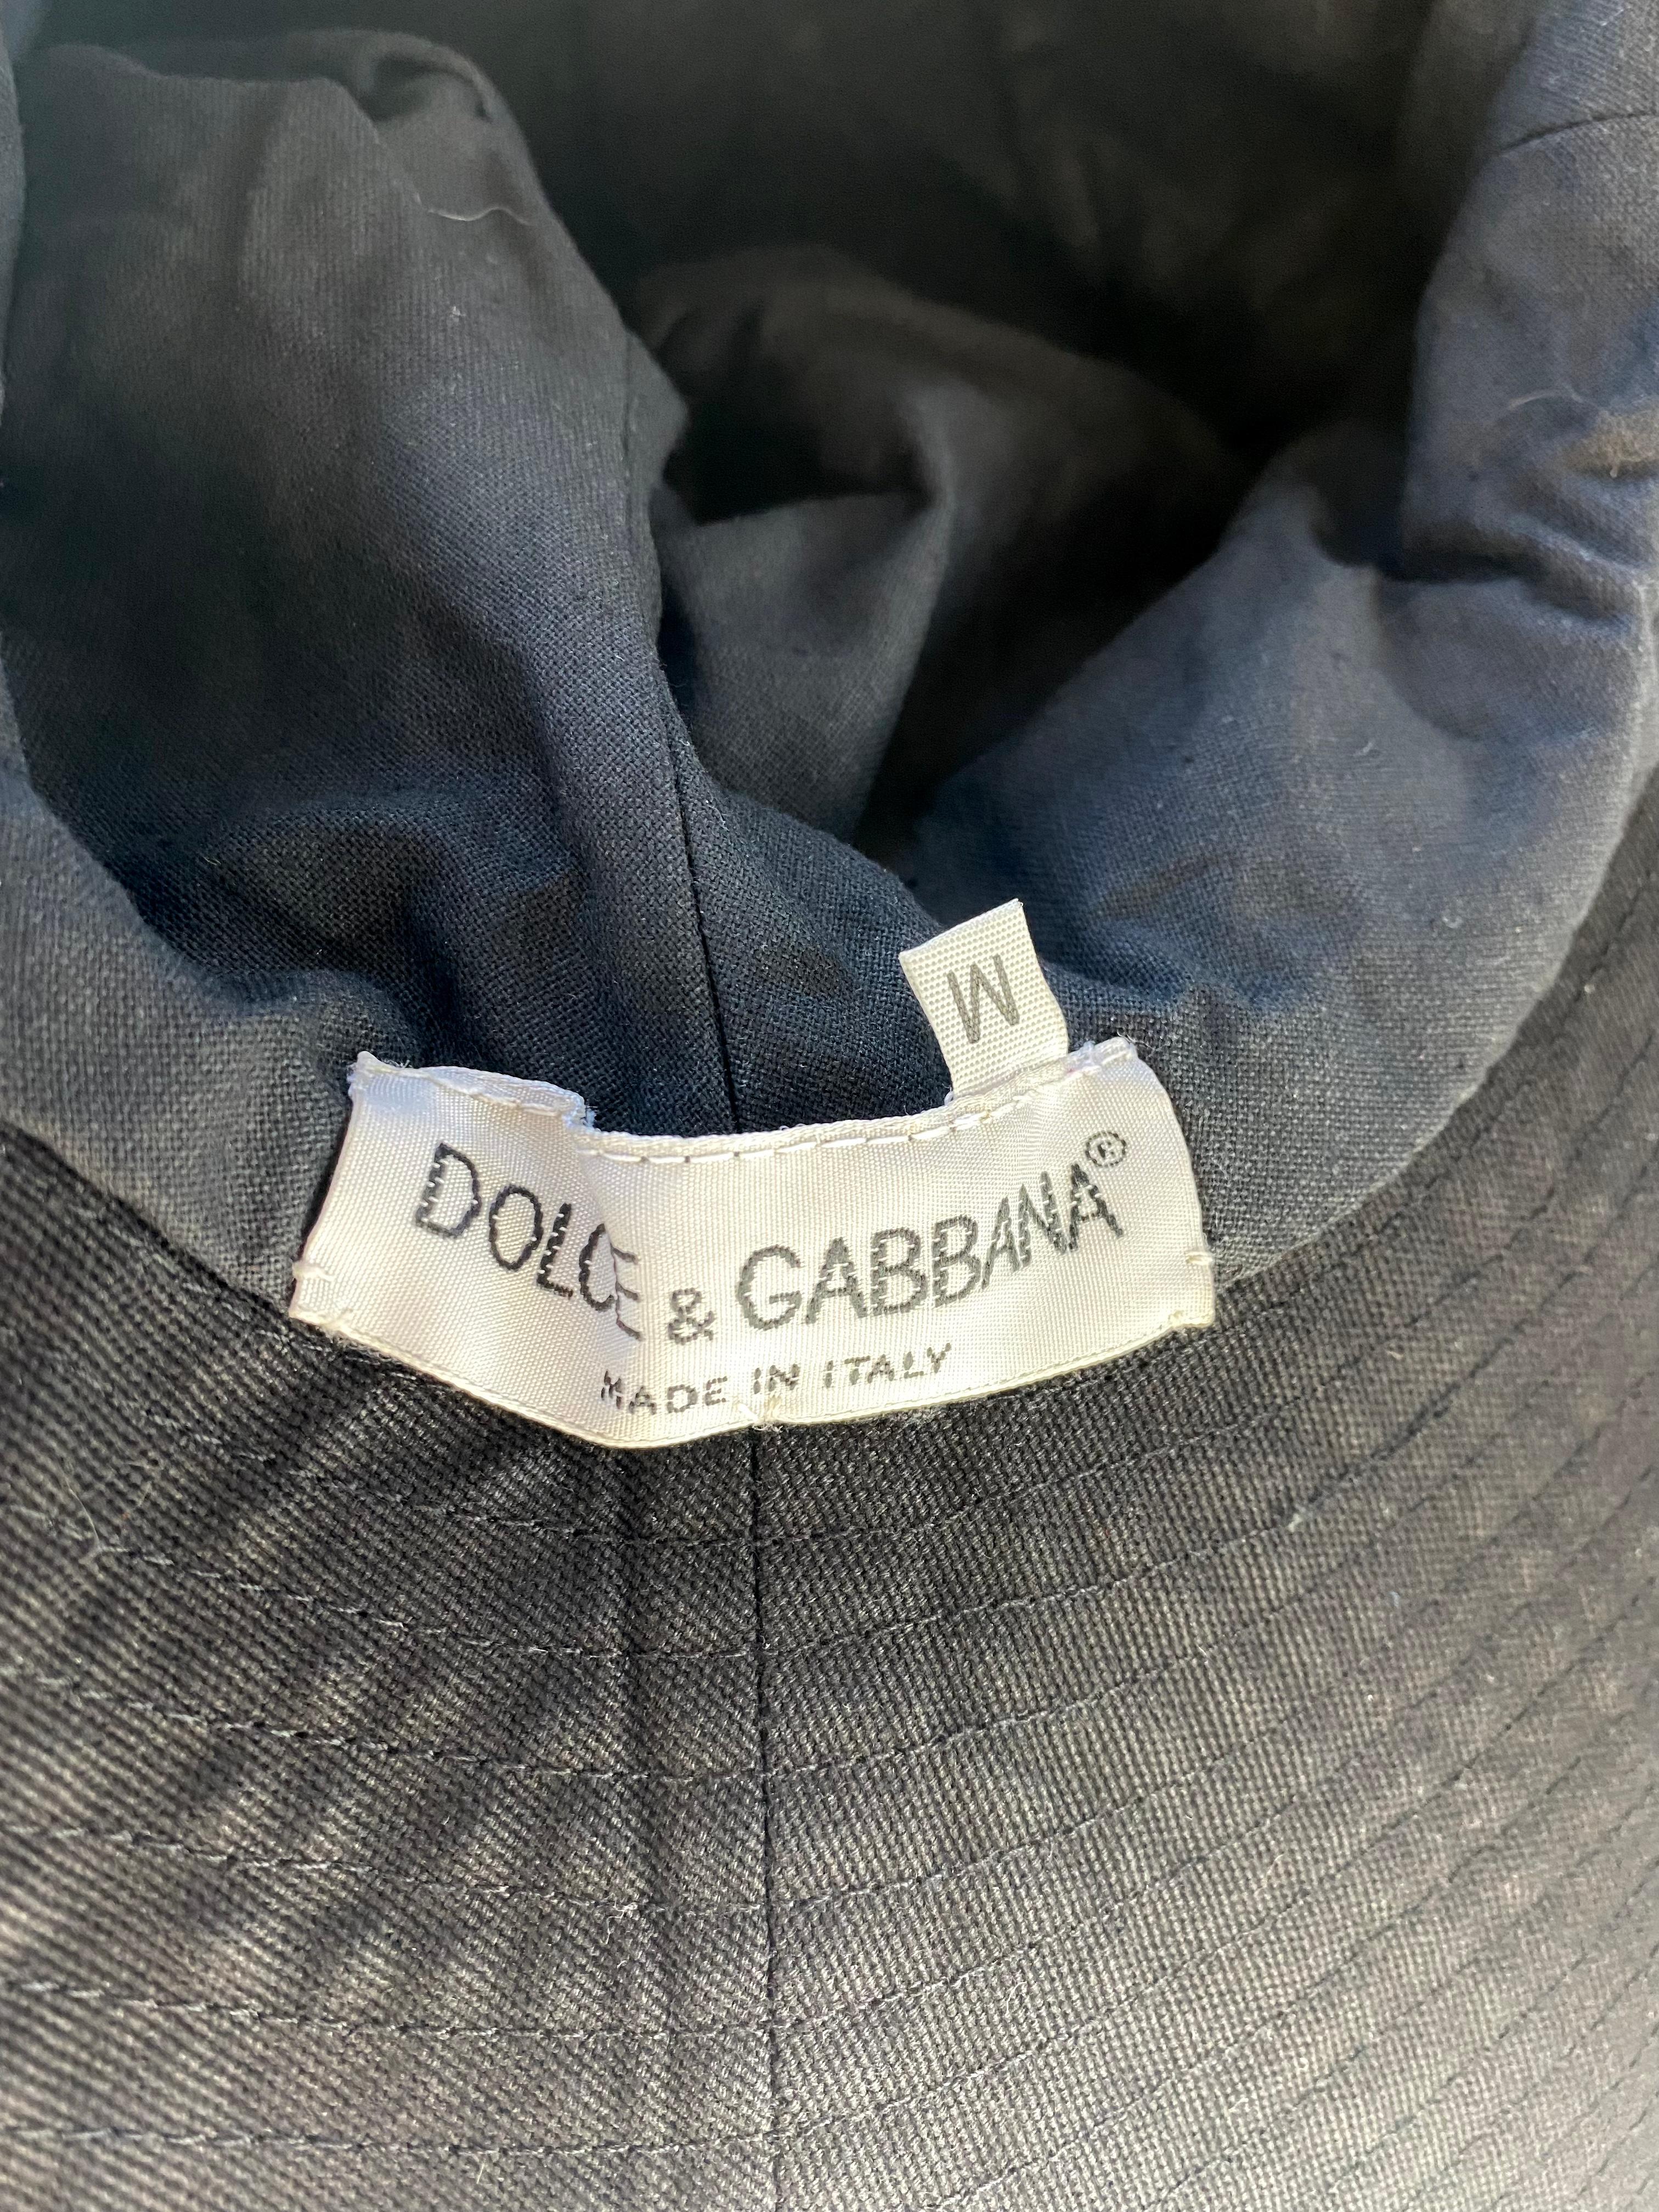 S/S 1993 Dolce & Gabbana Ab Fab Oversized Bucket Hat Runway Boho 5